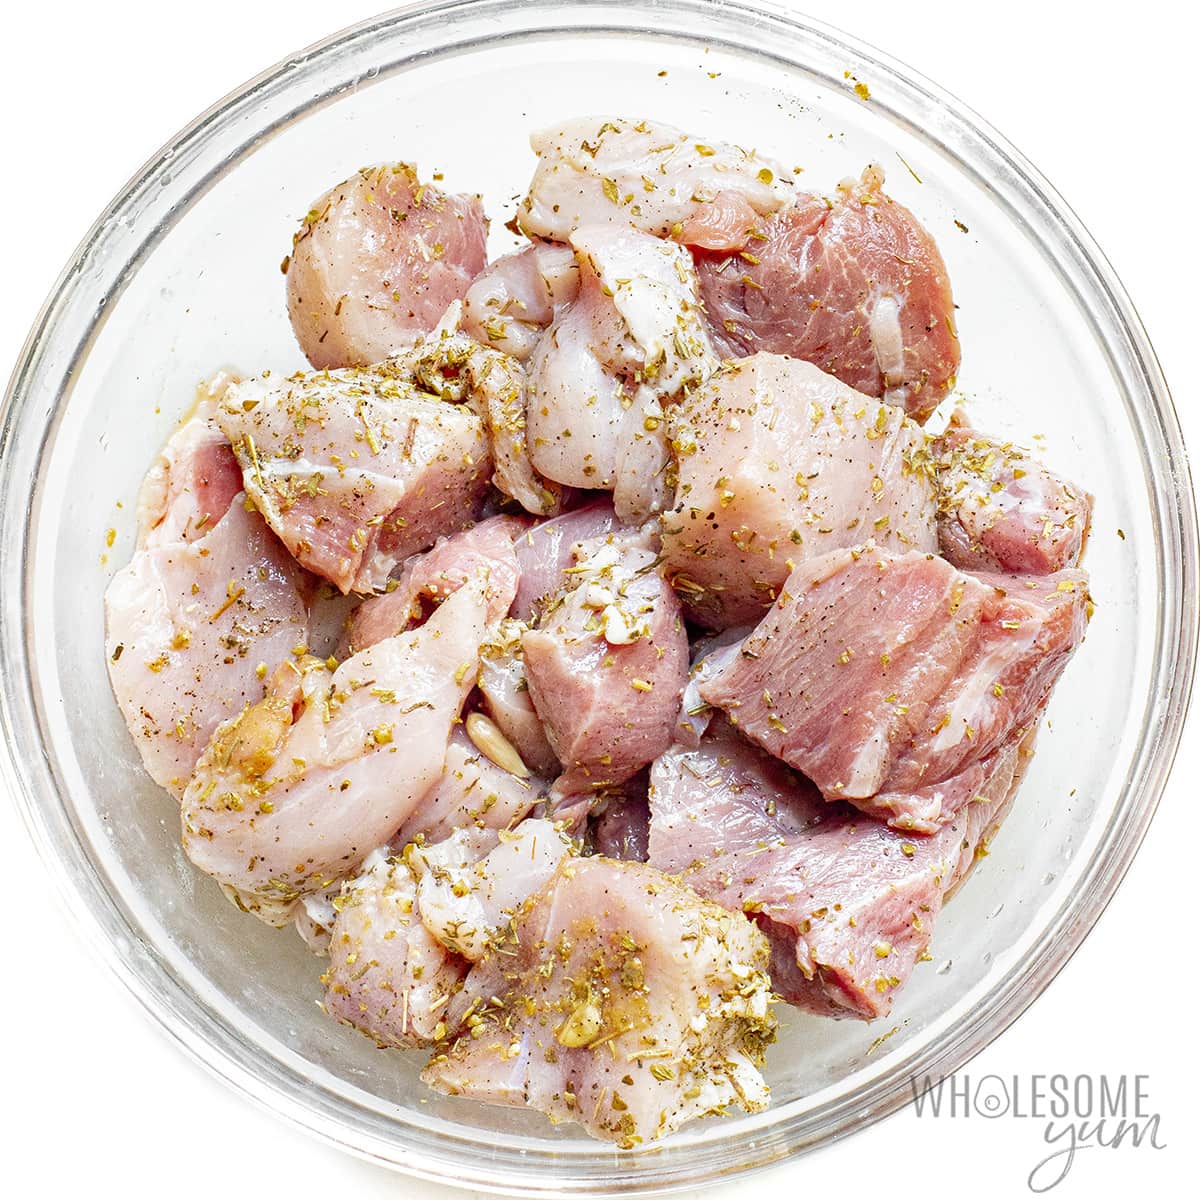 Diced pork in a bowl with seasonings.